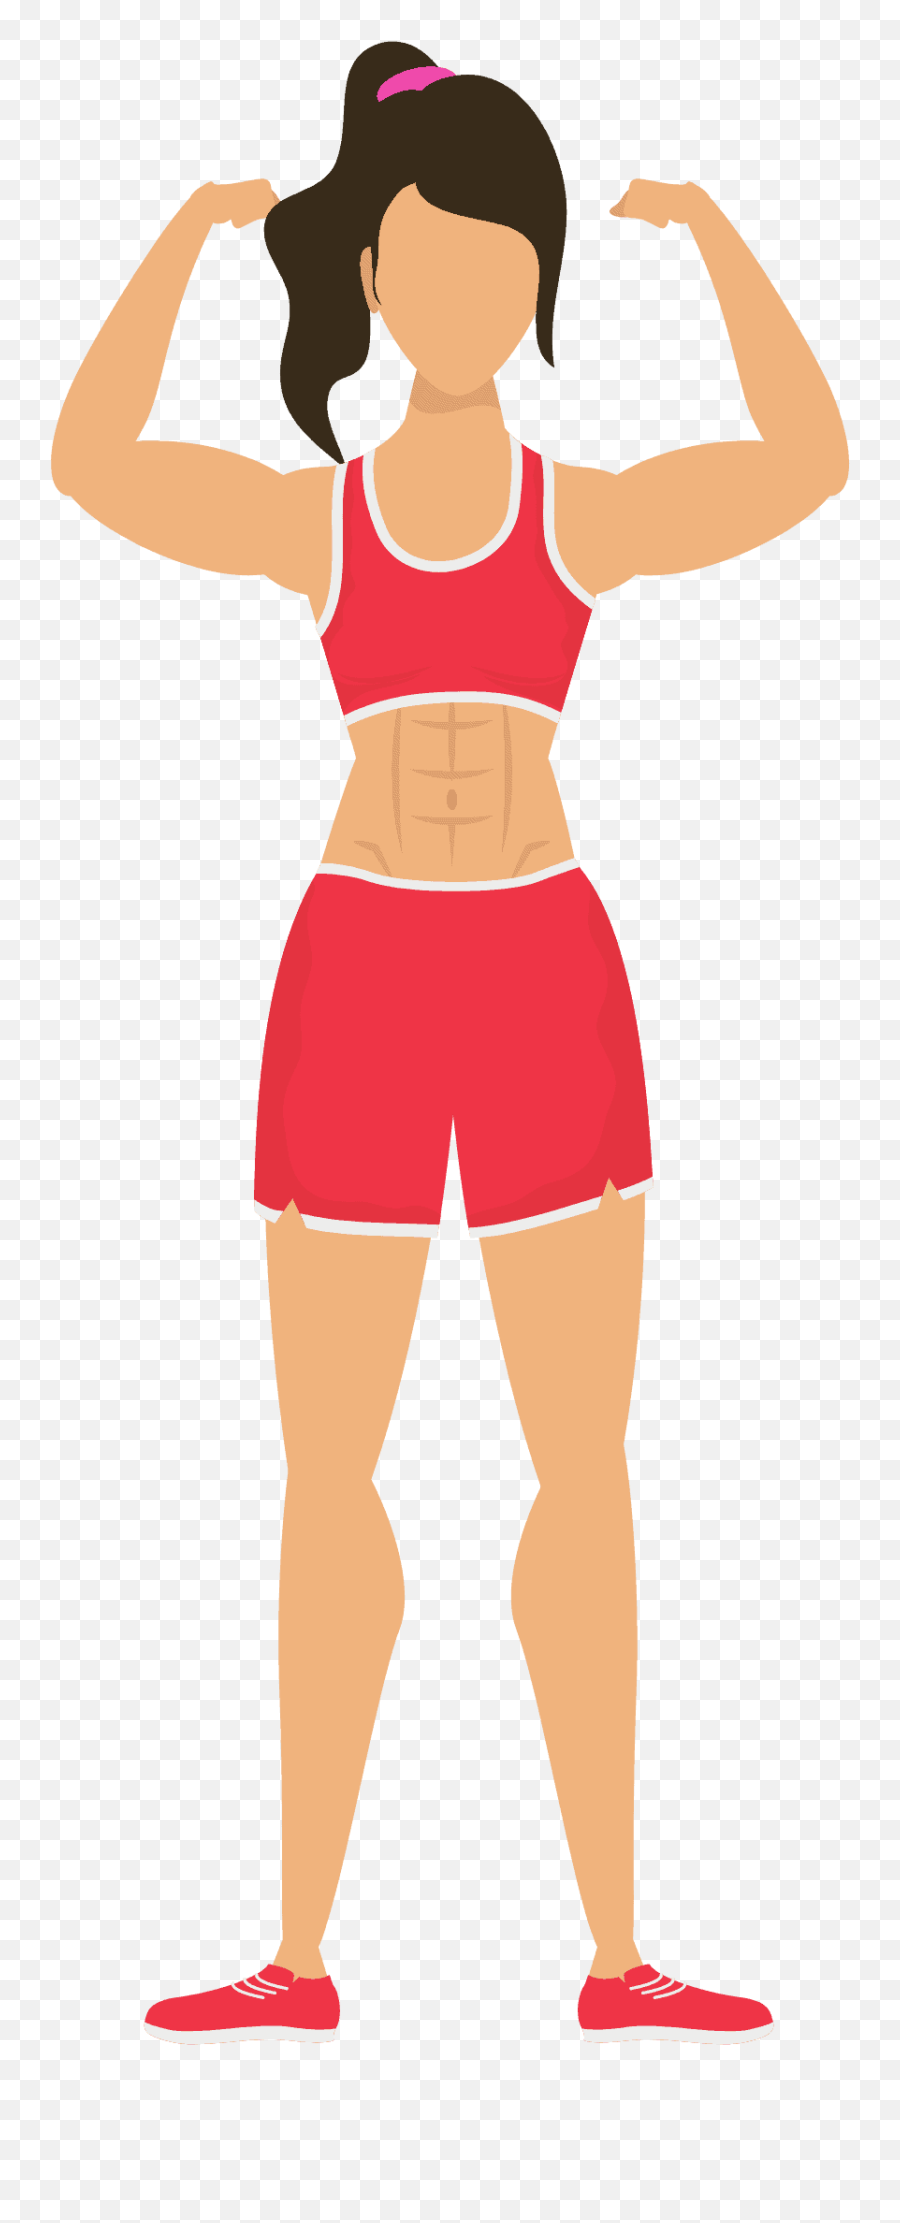 Building Your Best You - Fitness Motivation Ebook For Women U2013 Lifestyle Emoji,Workout Emojis Inspiribg